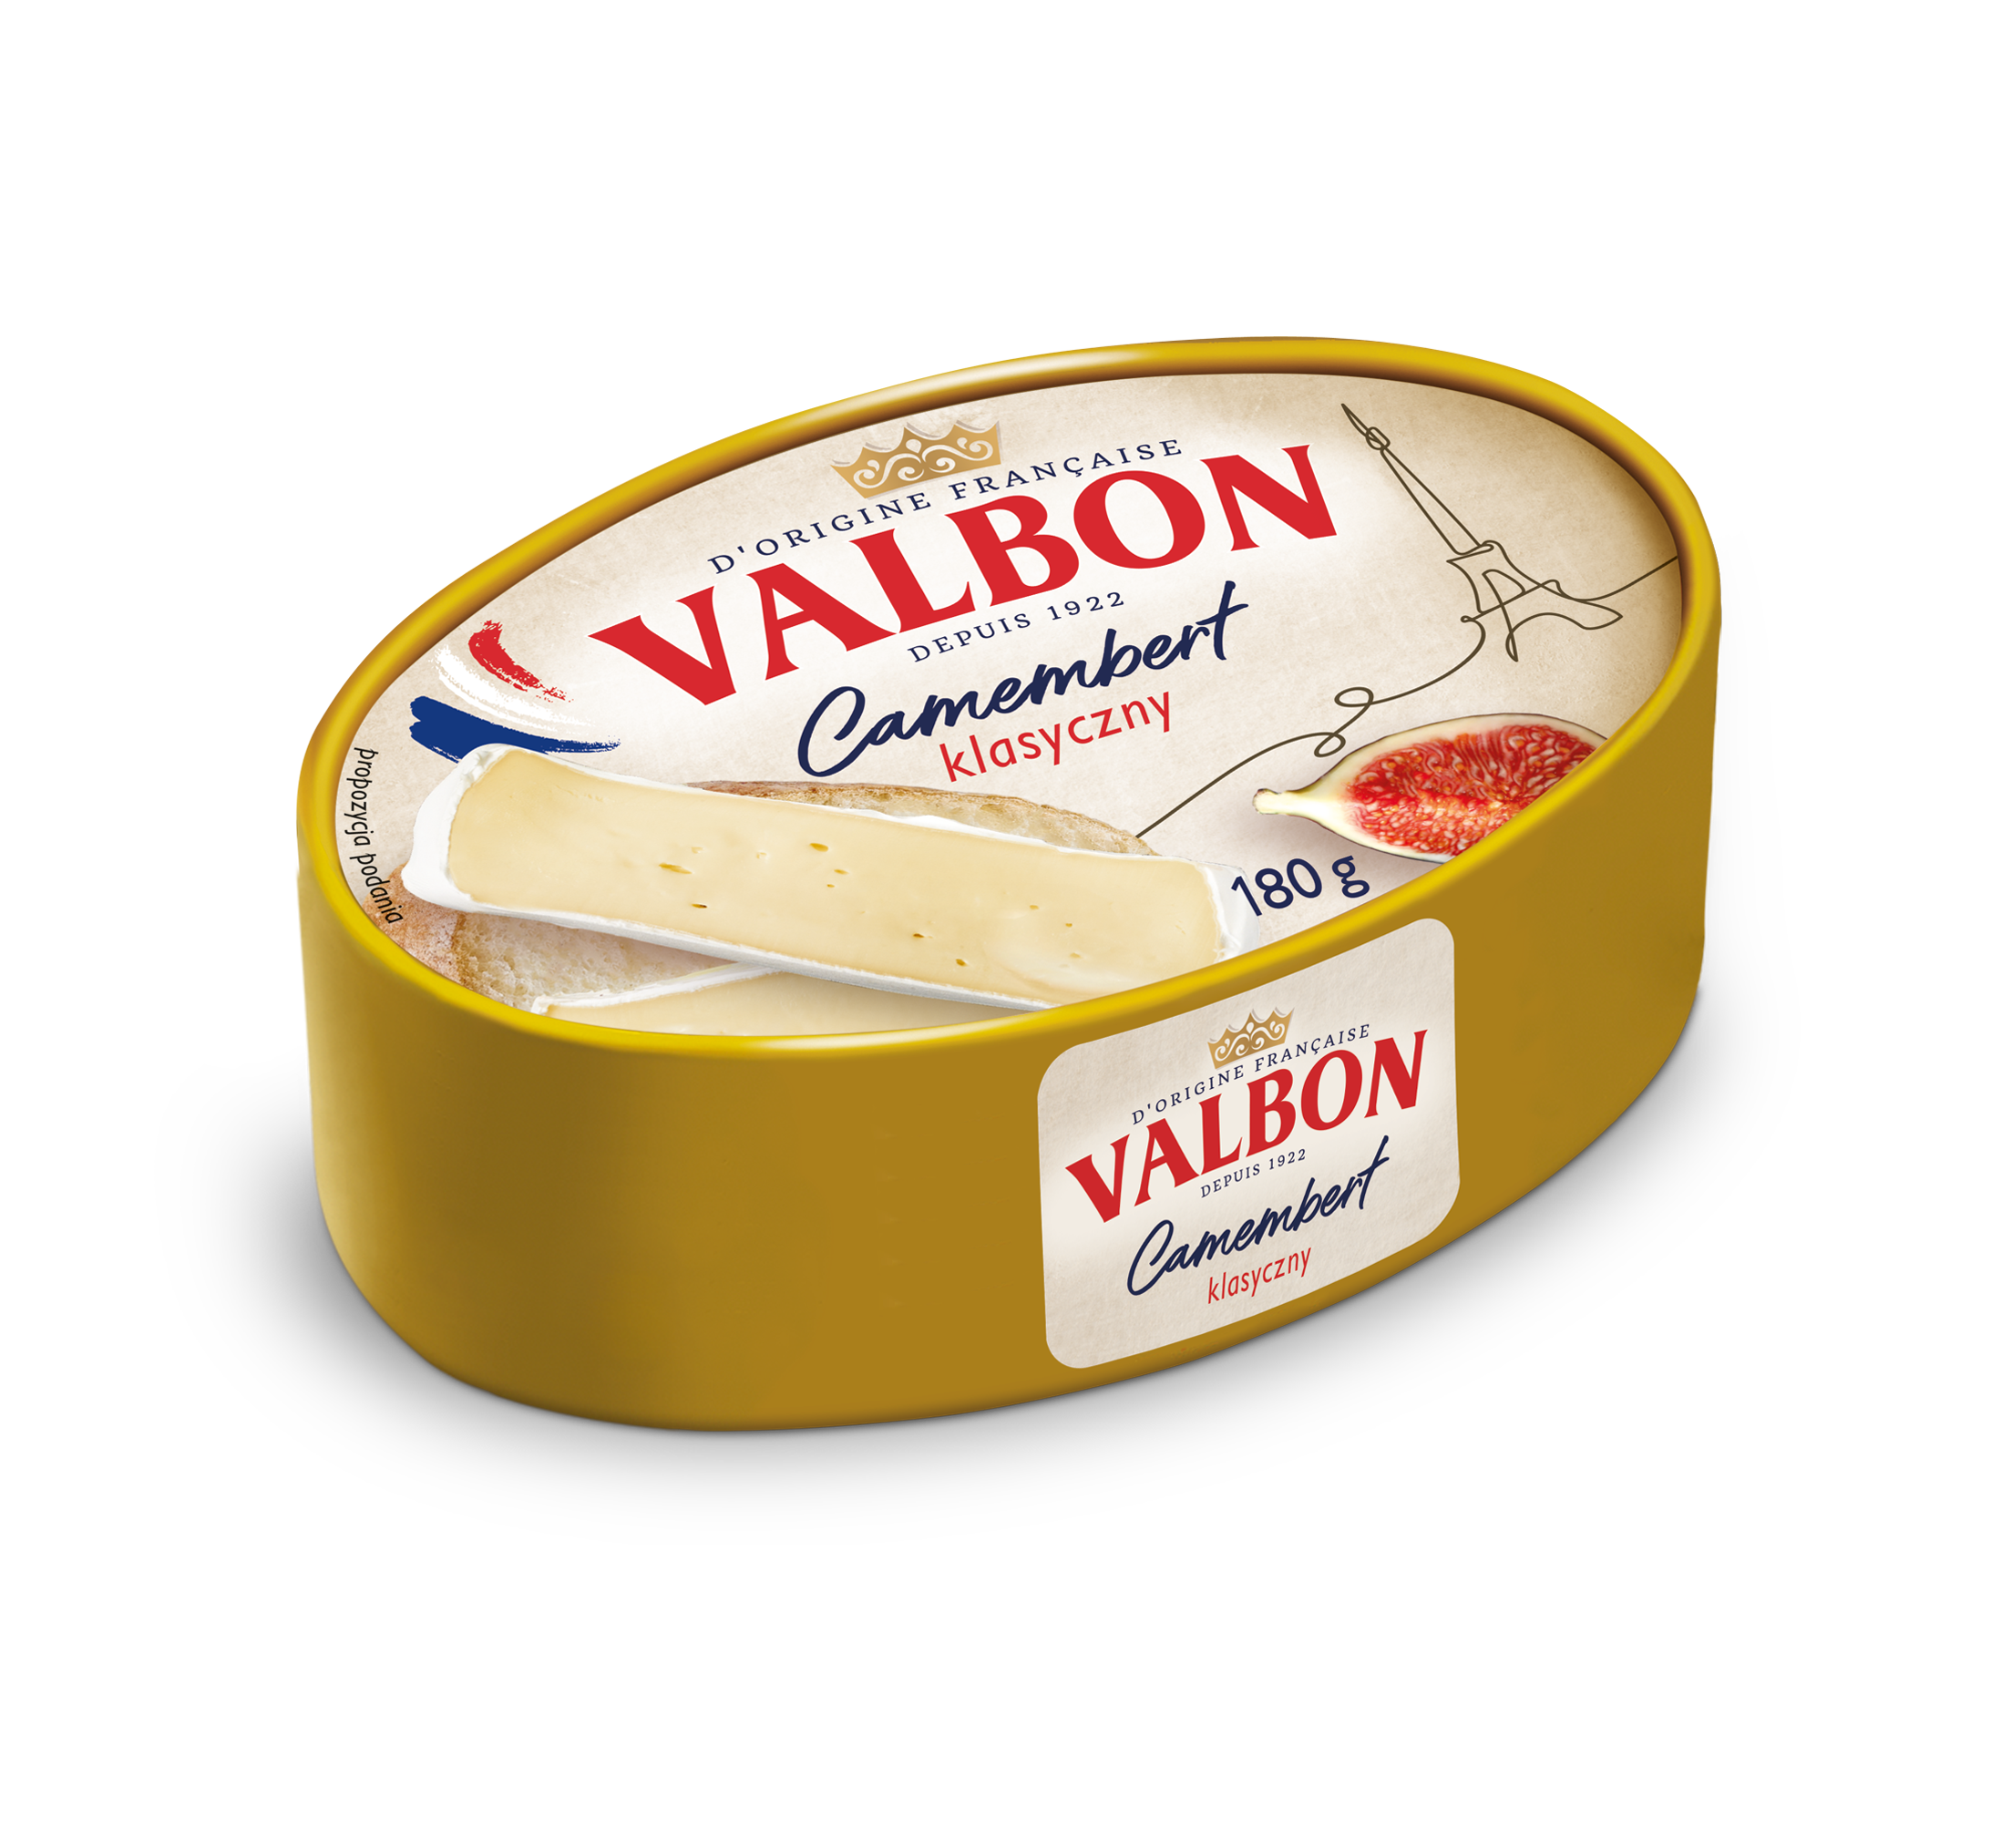 Ser Valbon Camembert oryginalny